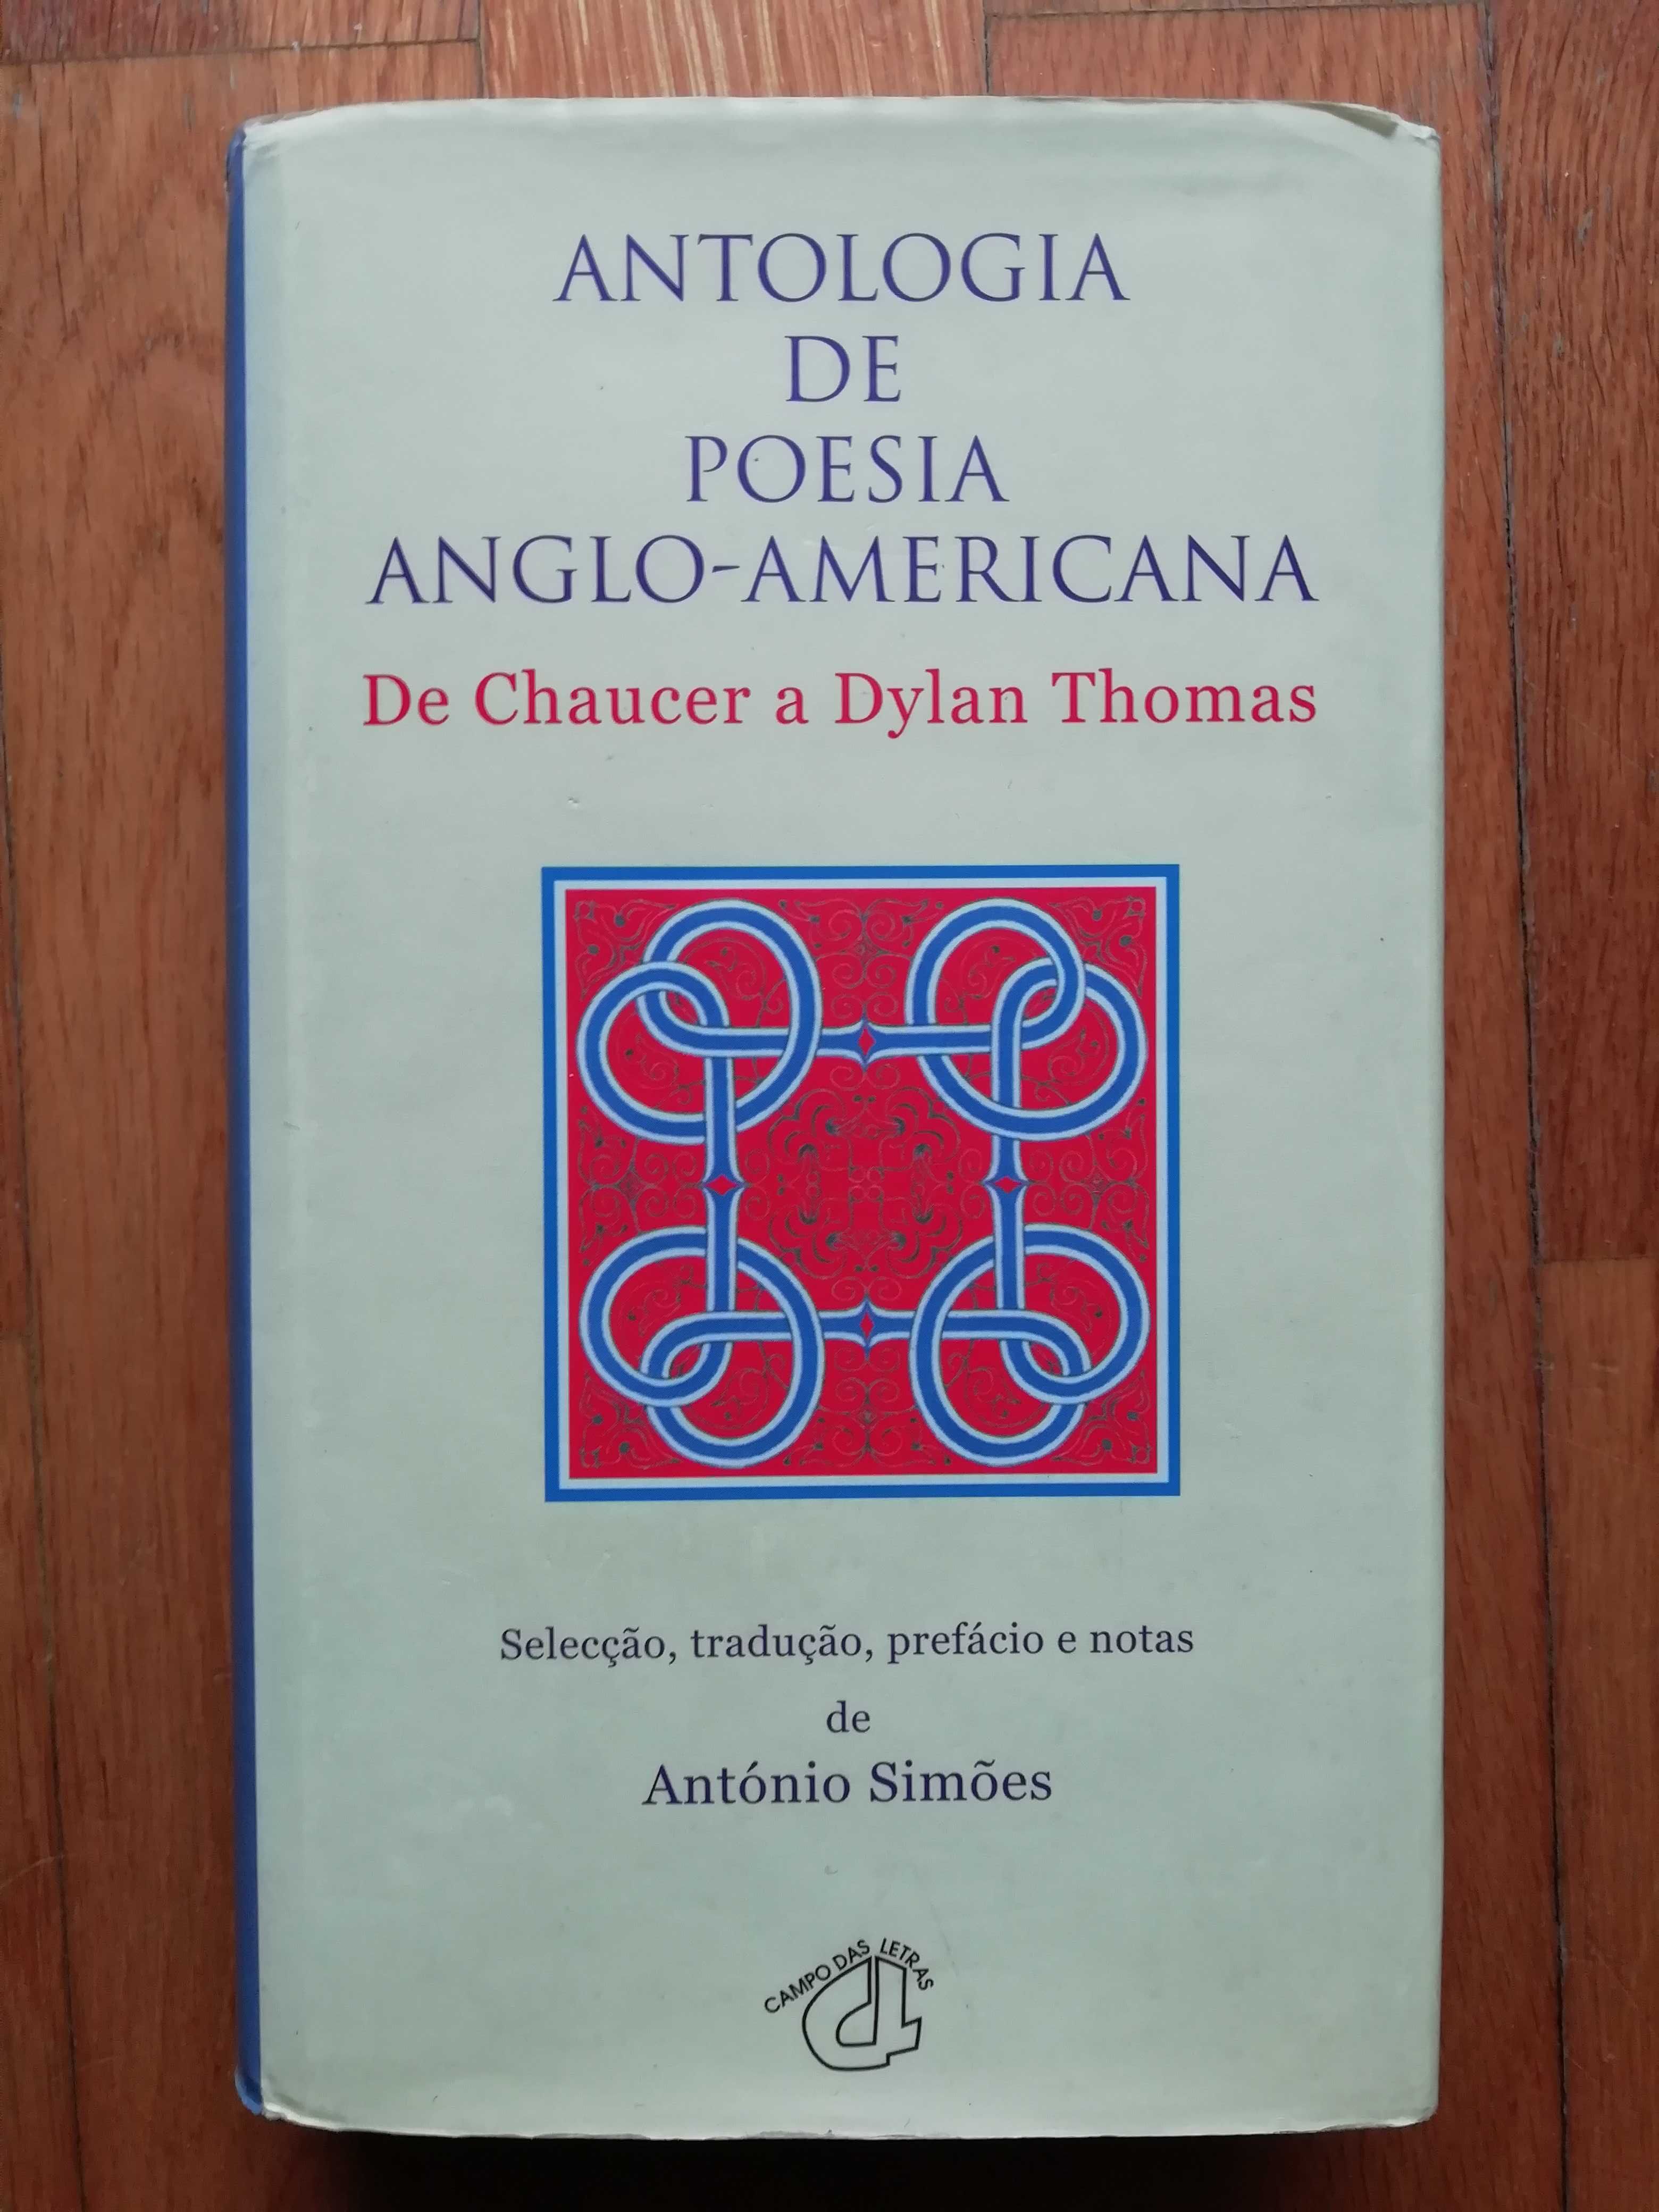 Antologia de Poesia Anglo-Americana de António Simões